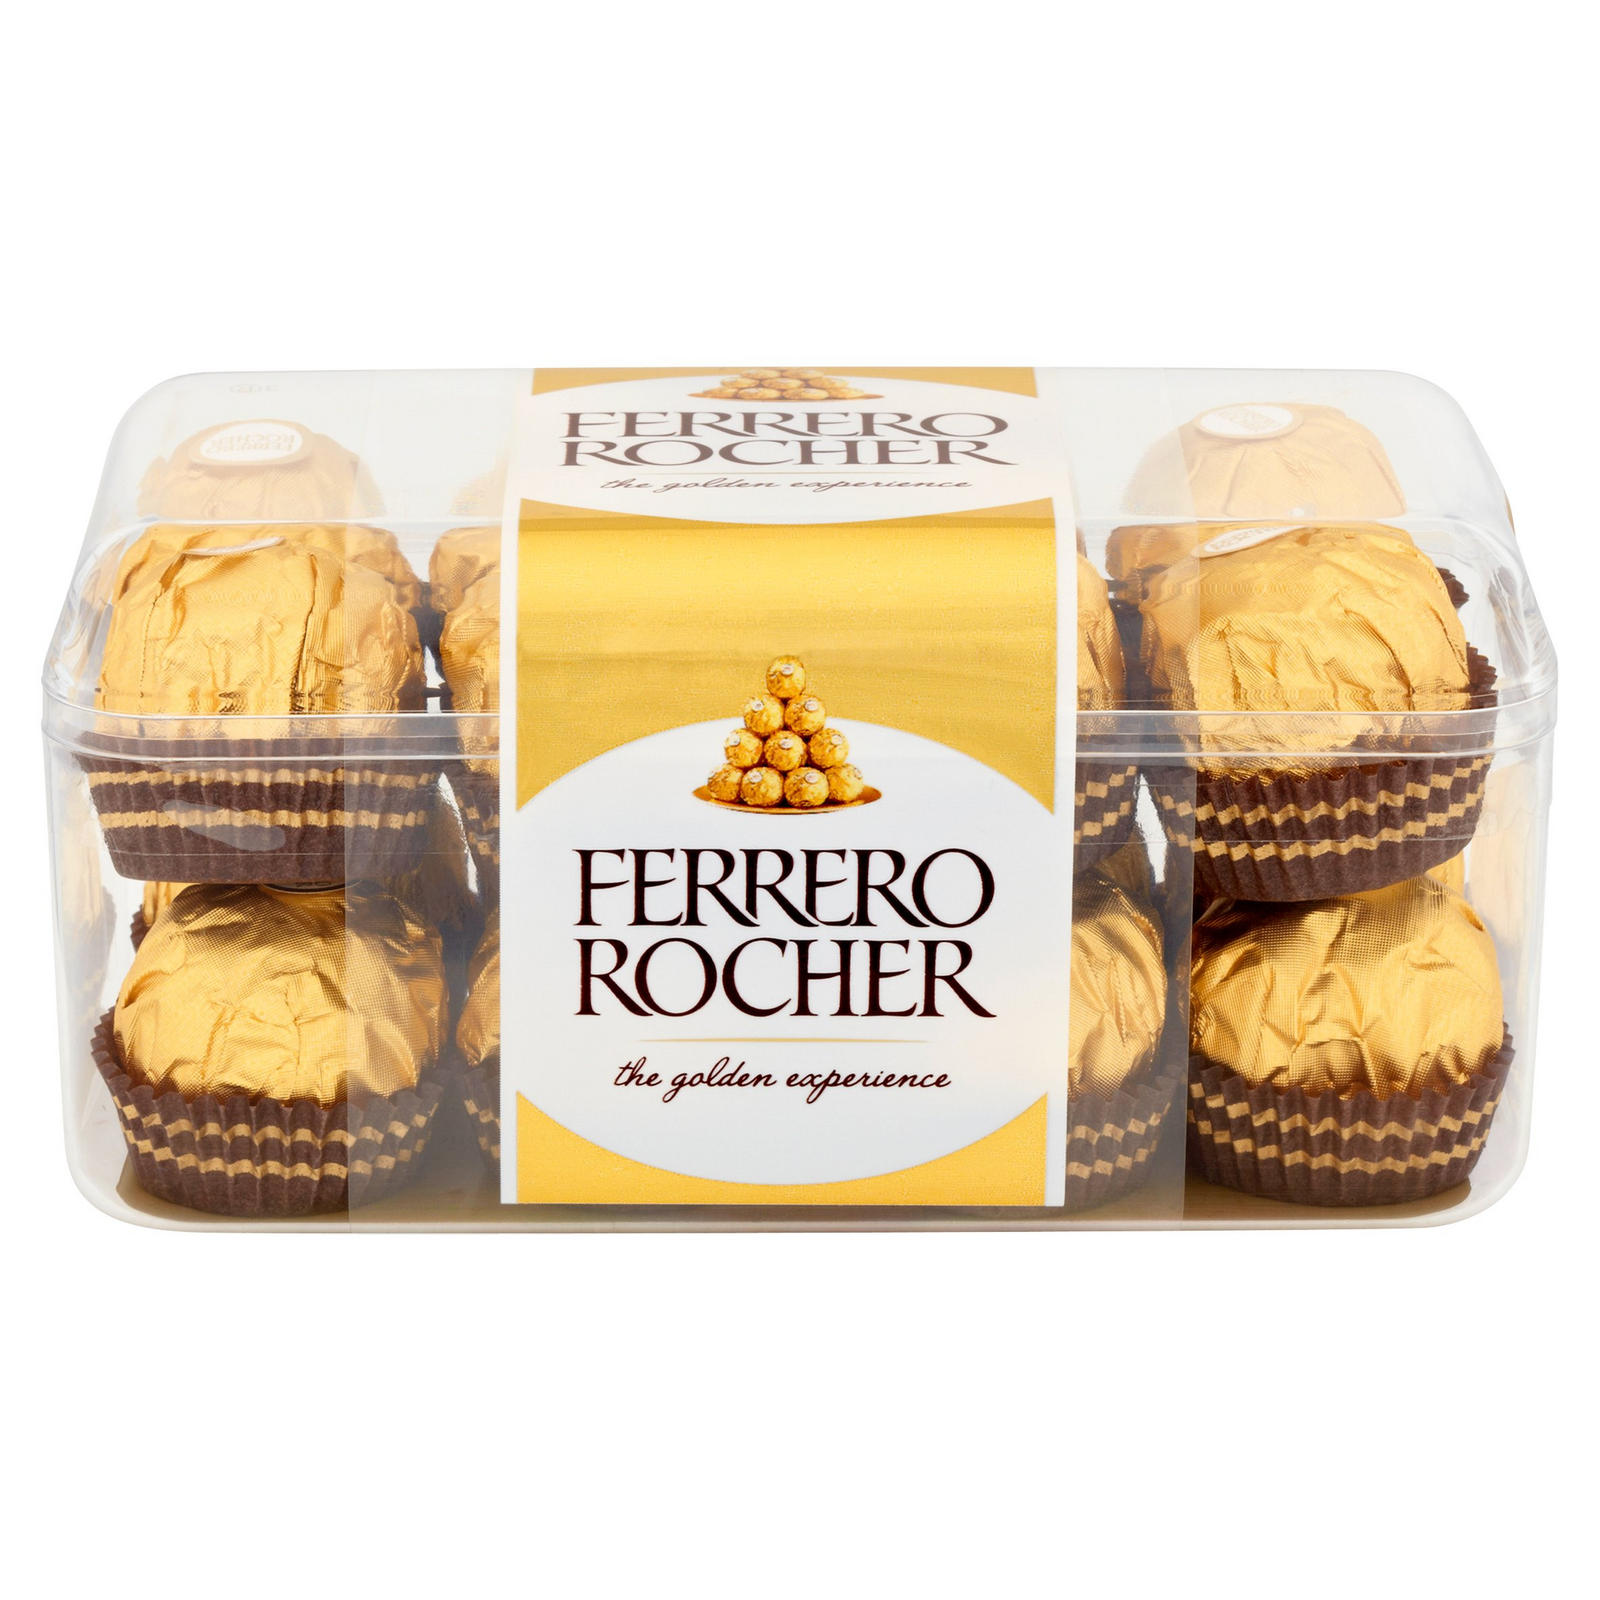 FERRERO ROCHER CHOCOLATE